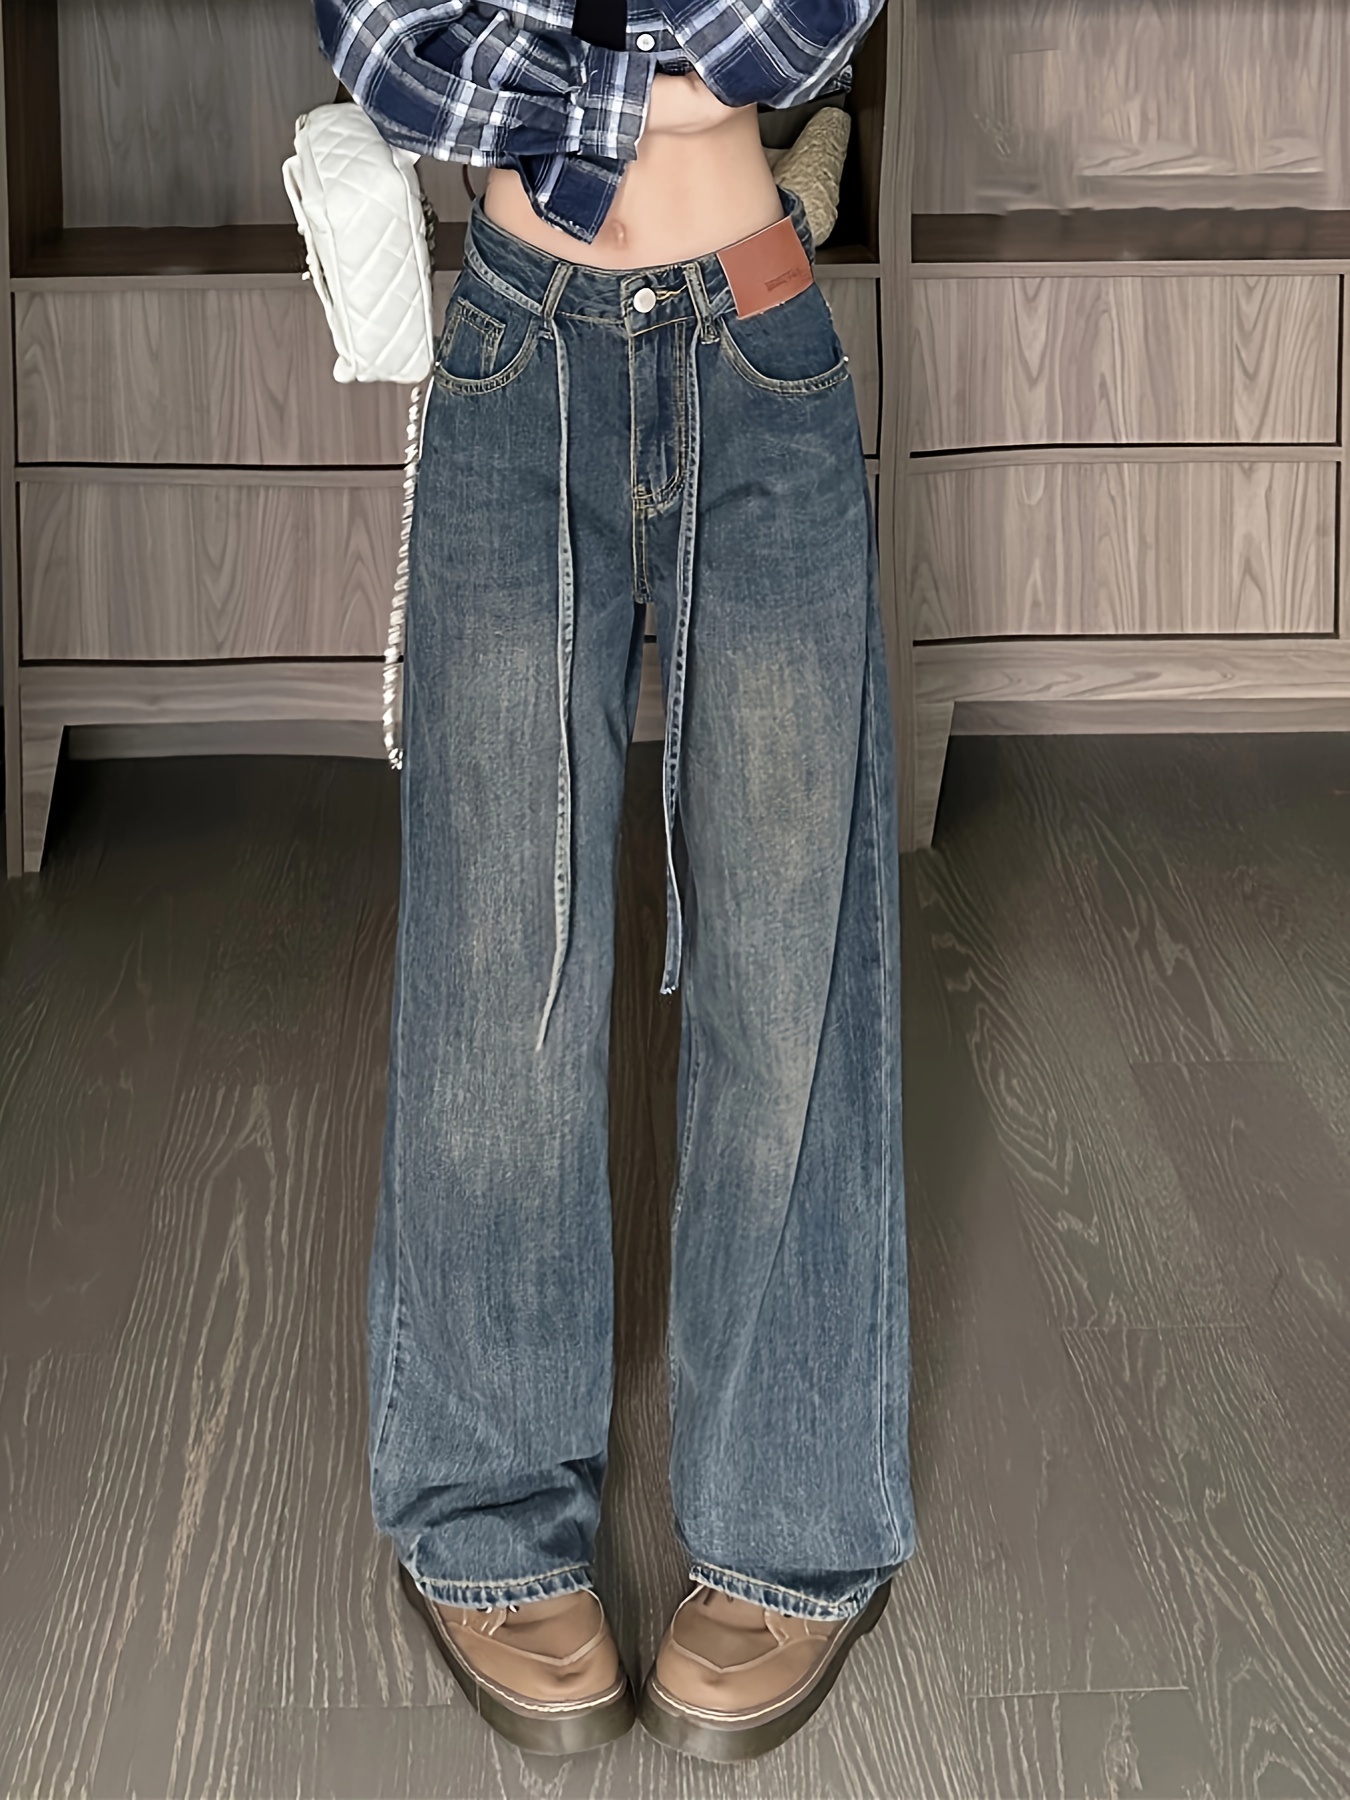 Jeans Kingdom - Boot-Cut Jeans, YesStyle